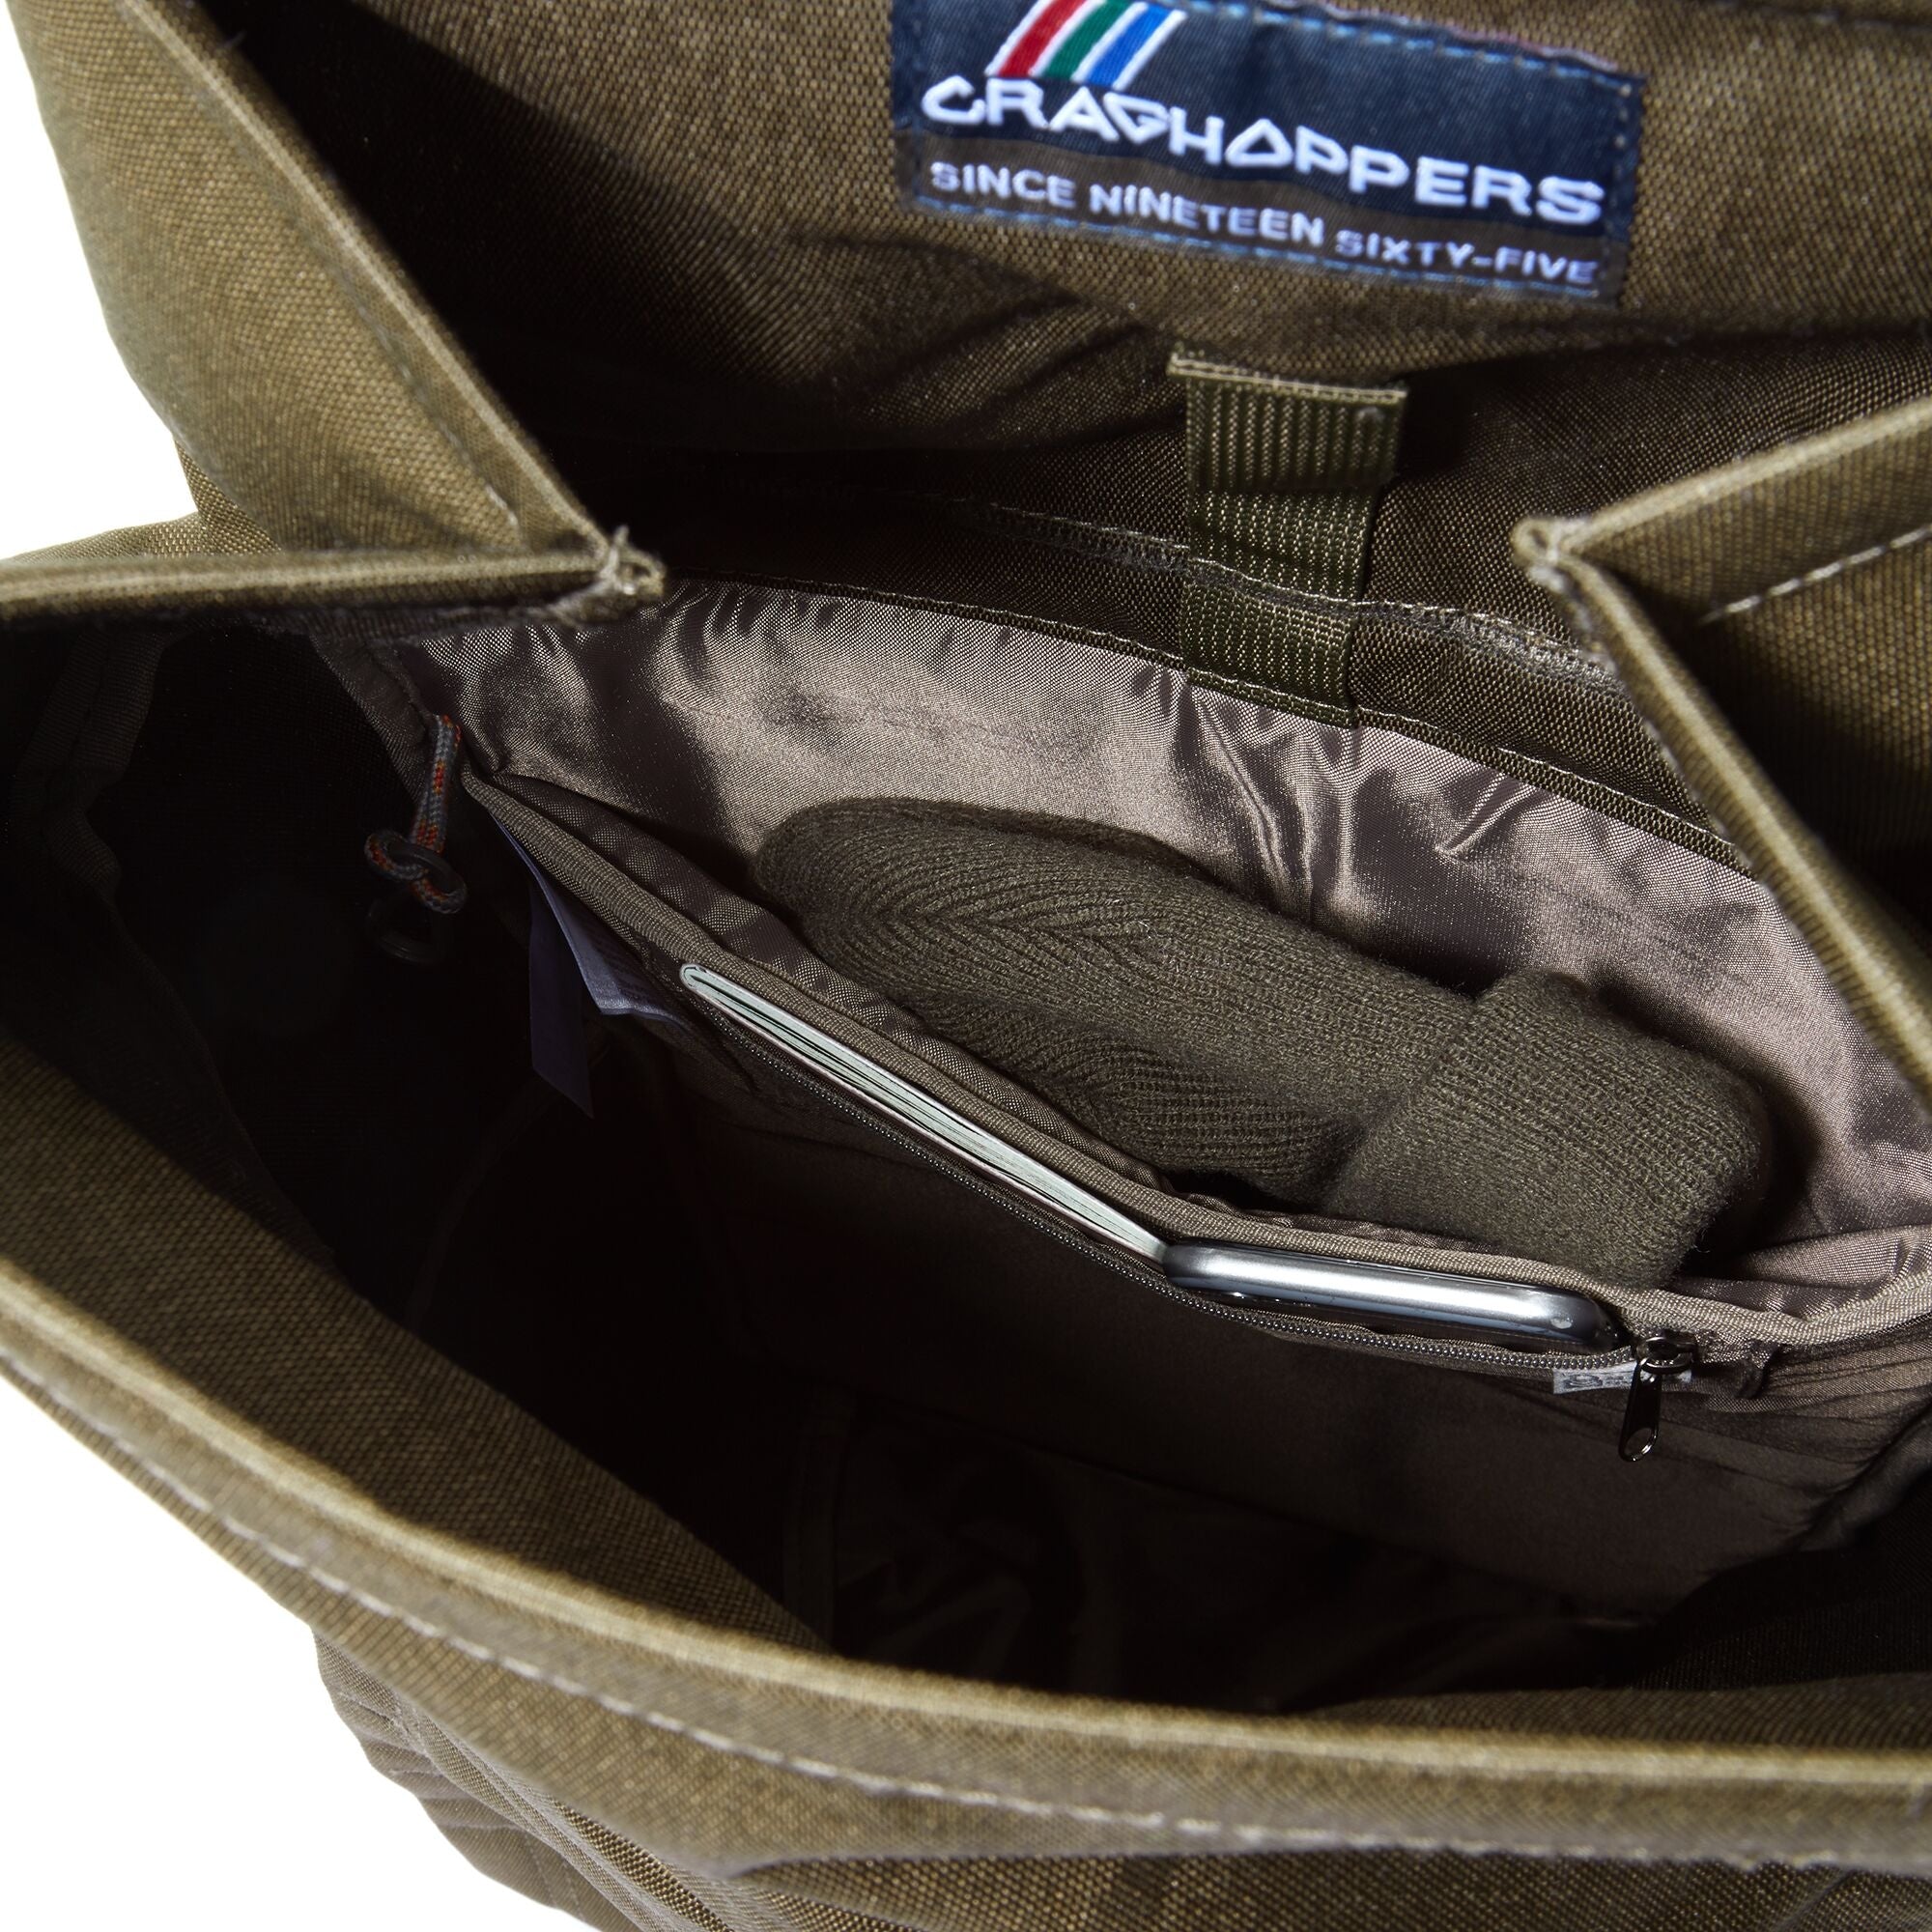 20L Kiwi Classic Rolltop Backpack | Woodland Green